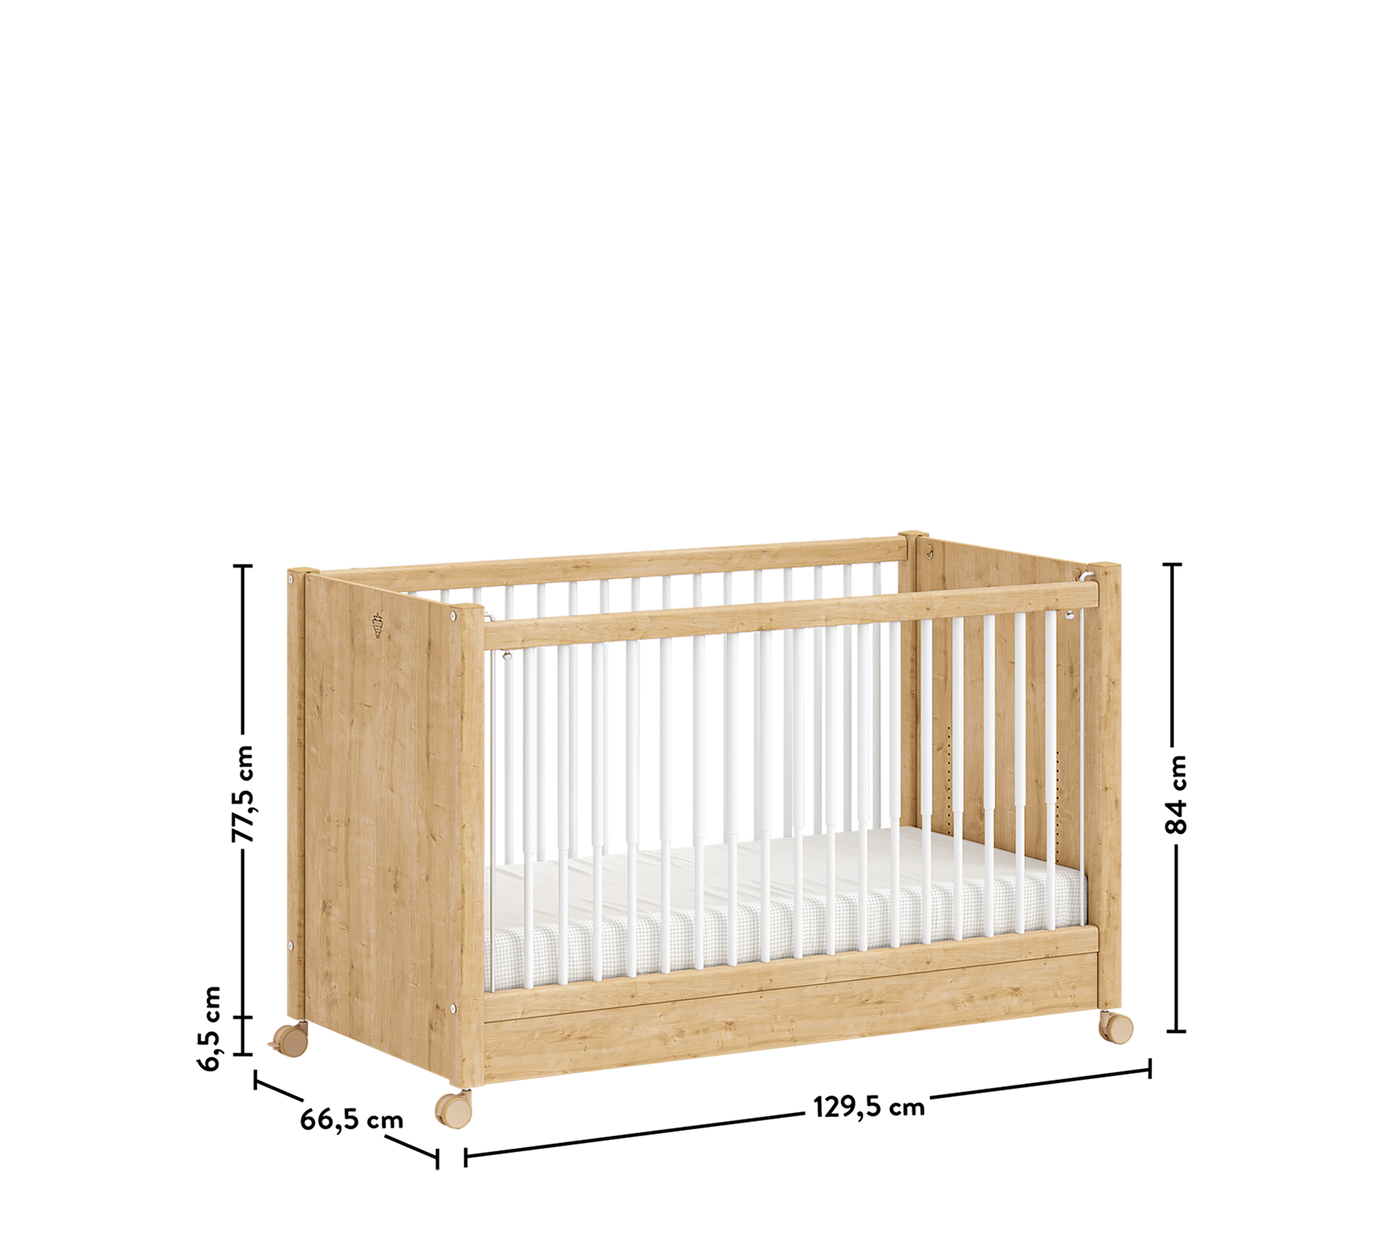 BABY BED OAK НАКОЛЕСАХ (60x120 см)